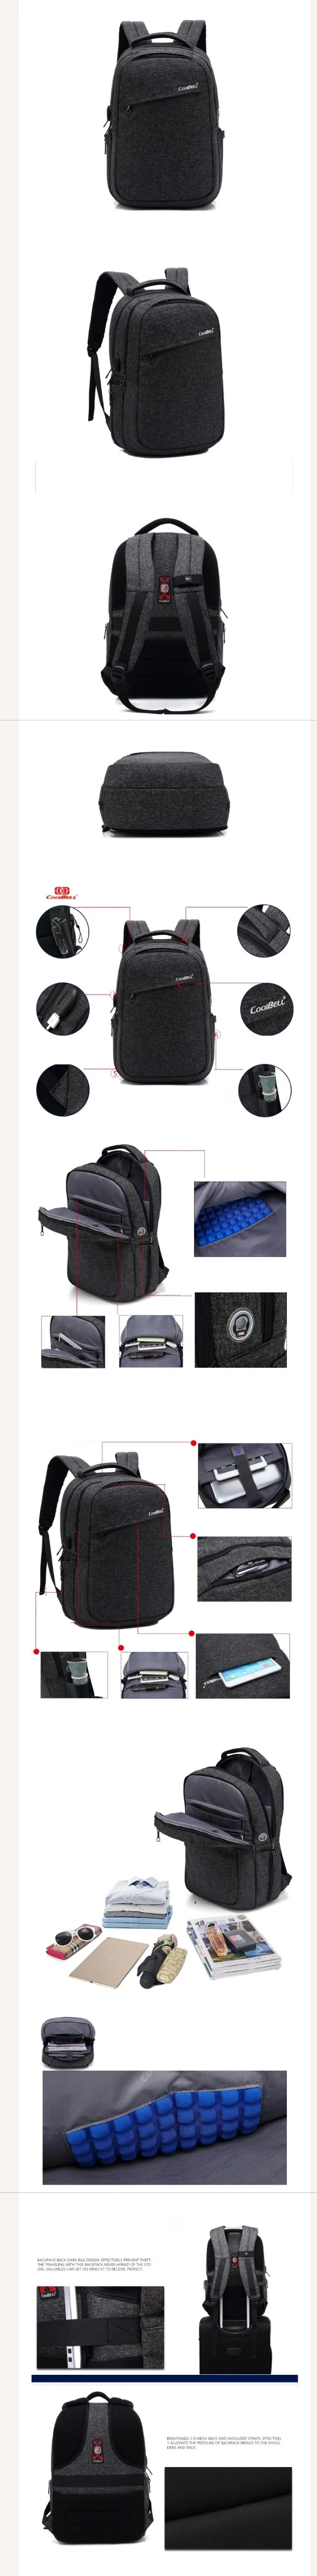 coolbell-7010-black-laptop backpacks